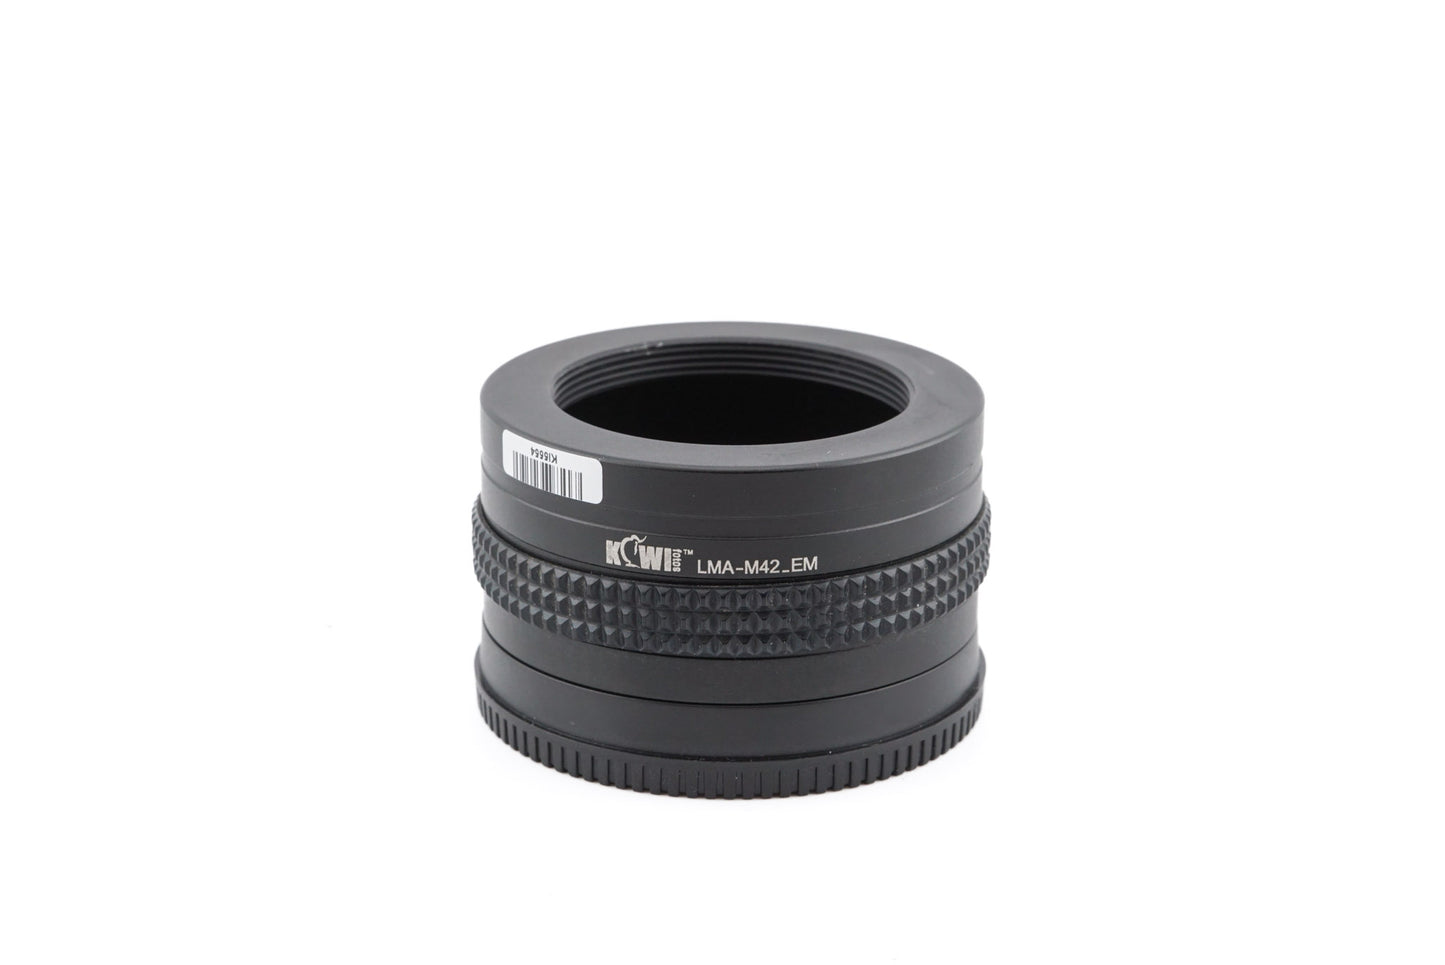 Kiwi M42 - Sony E Adapter (LMA-M42_EM) - Lens Adapter